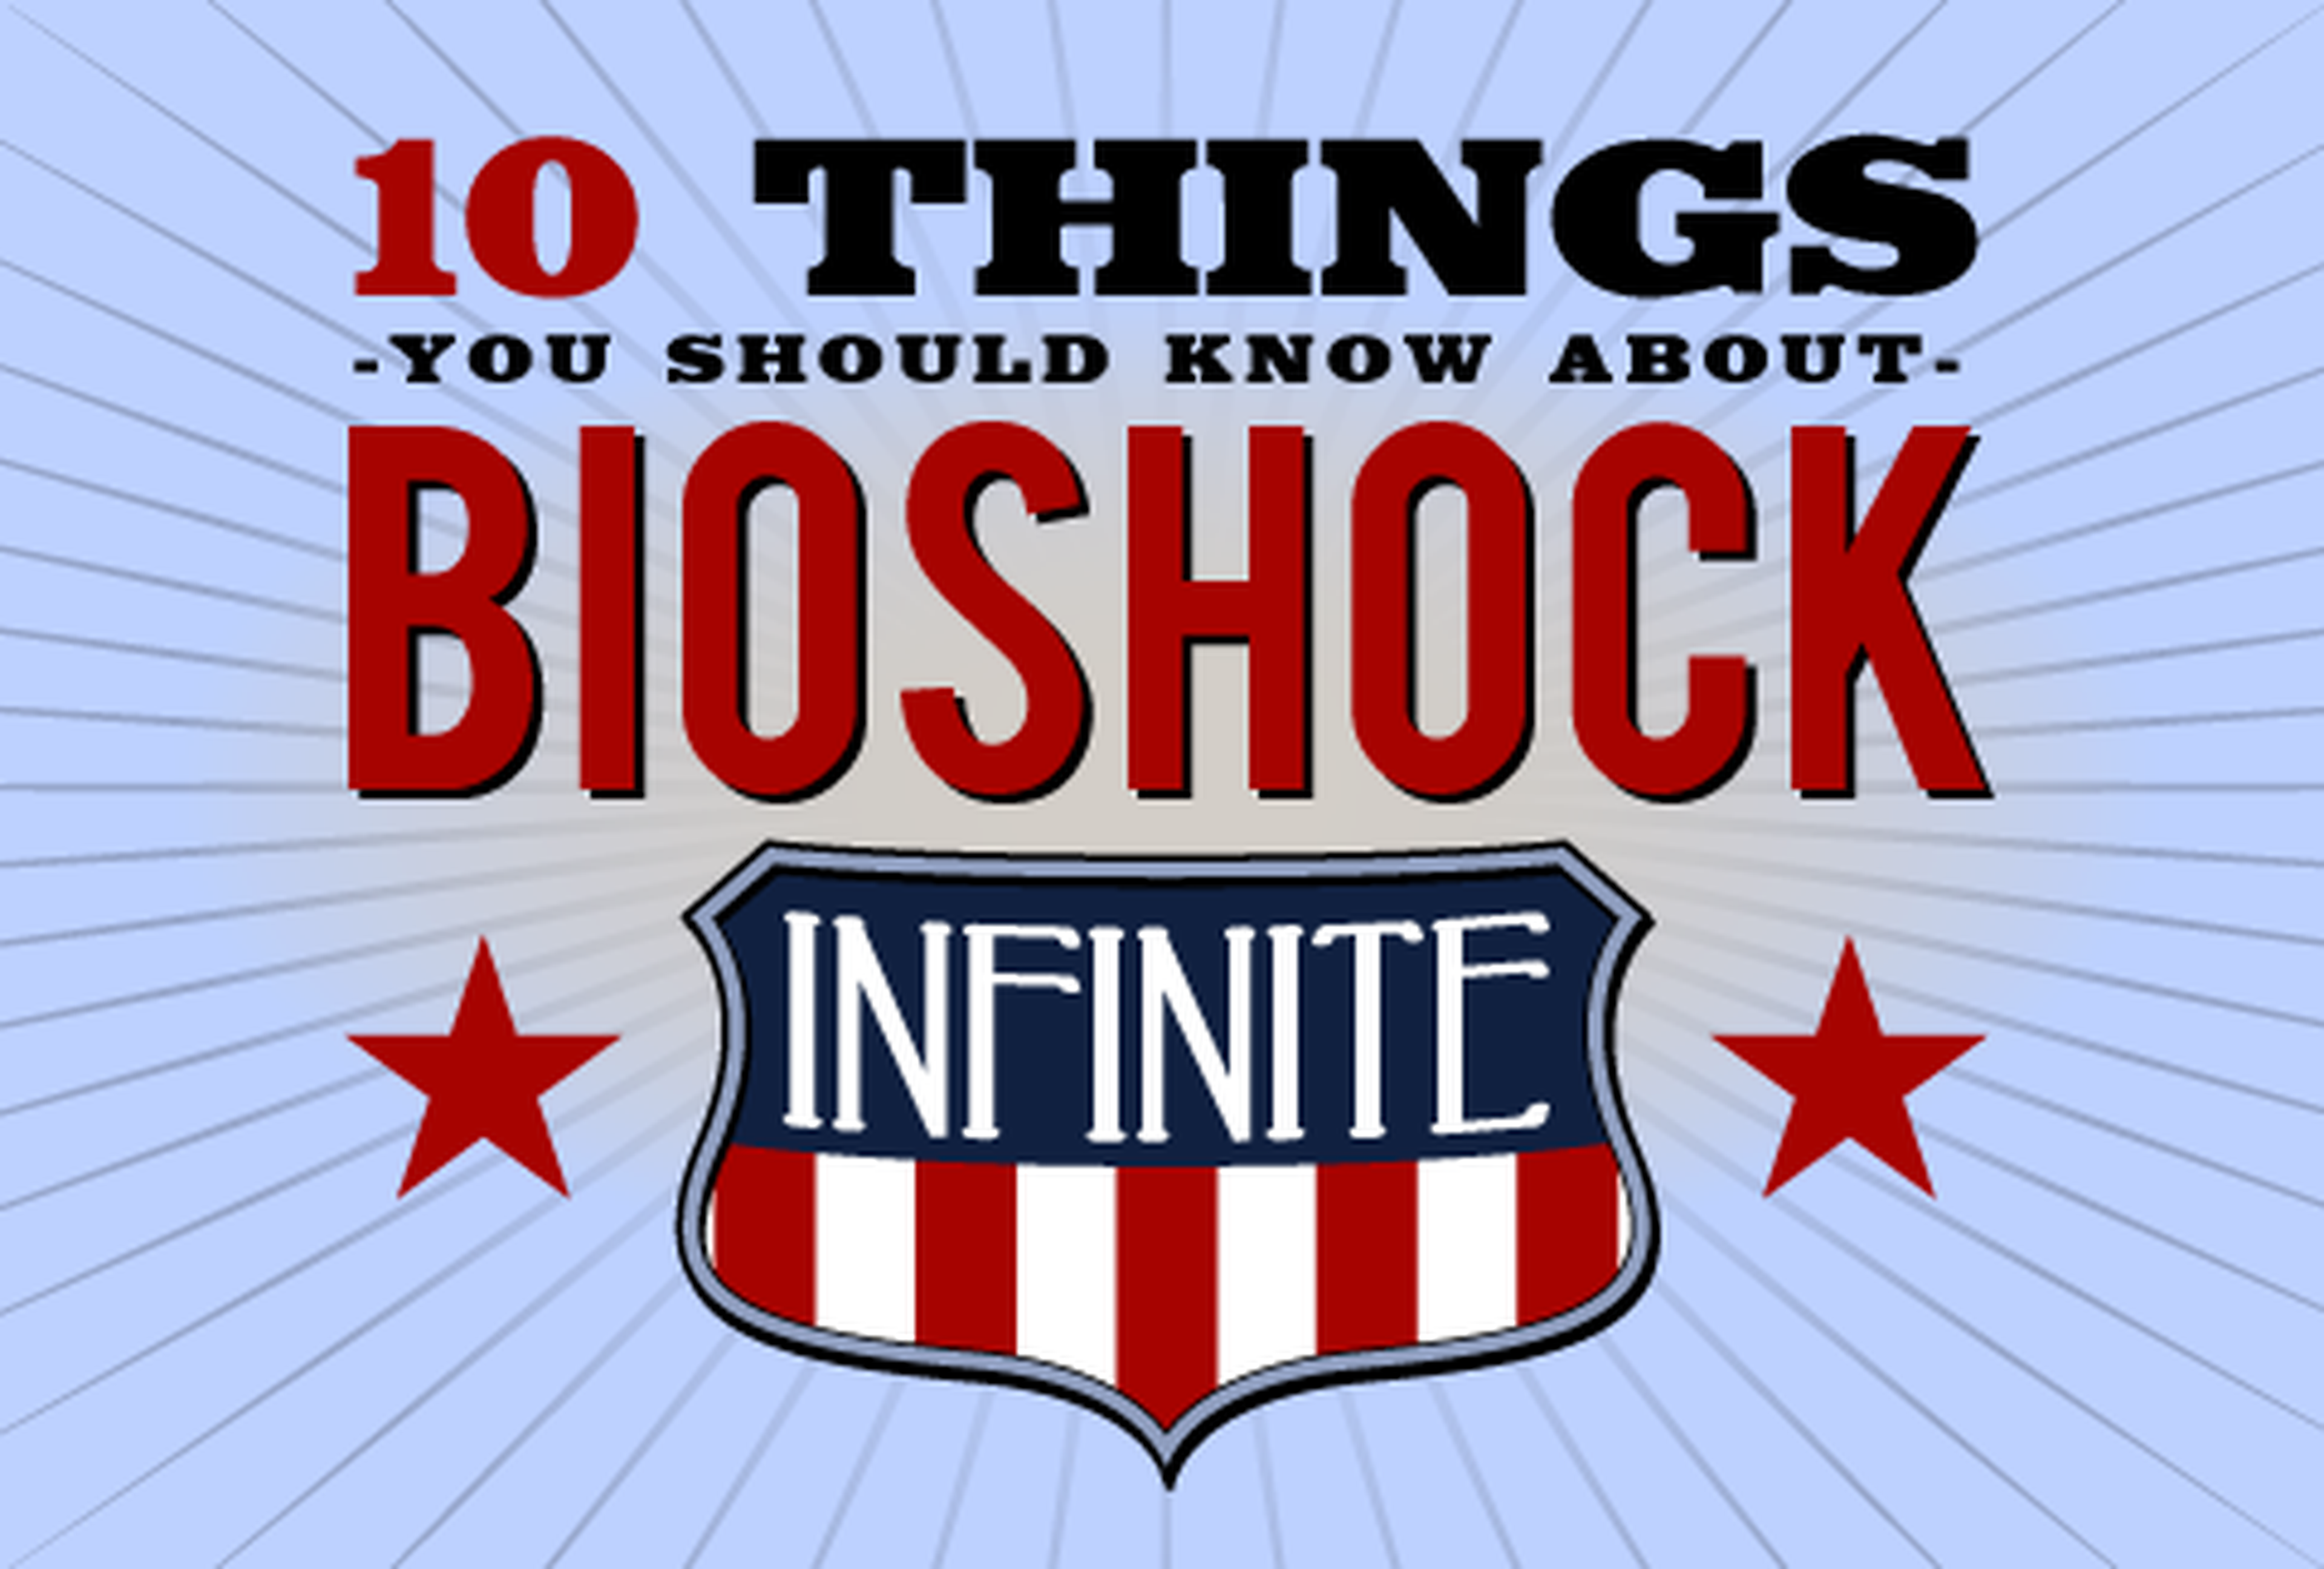 Bioshock Infinite se dejará ver pronto